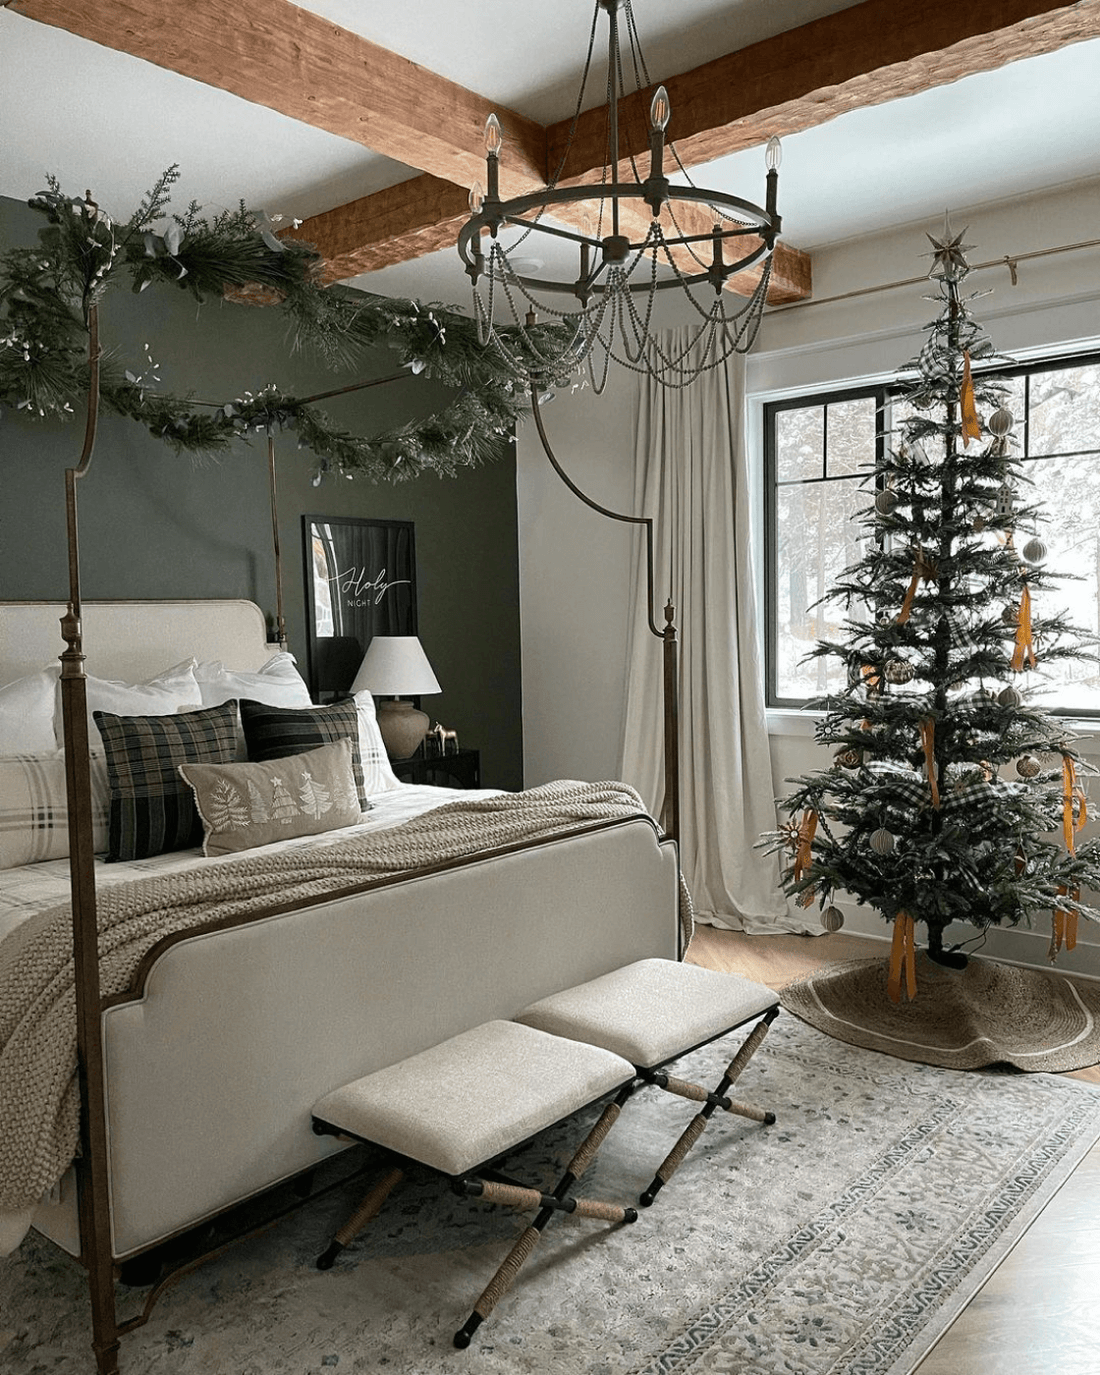 Bedroom Christmas Decorating Ideas